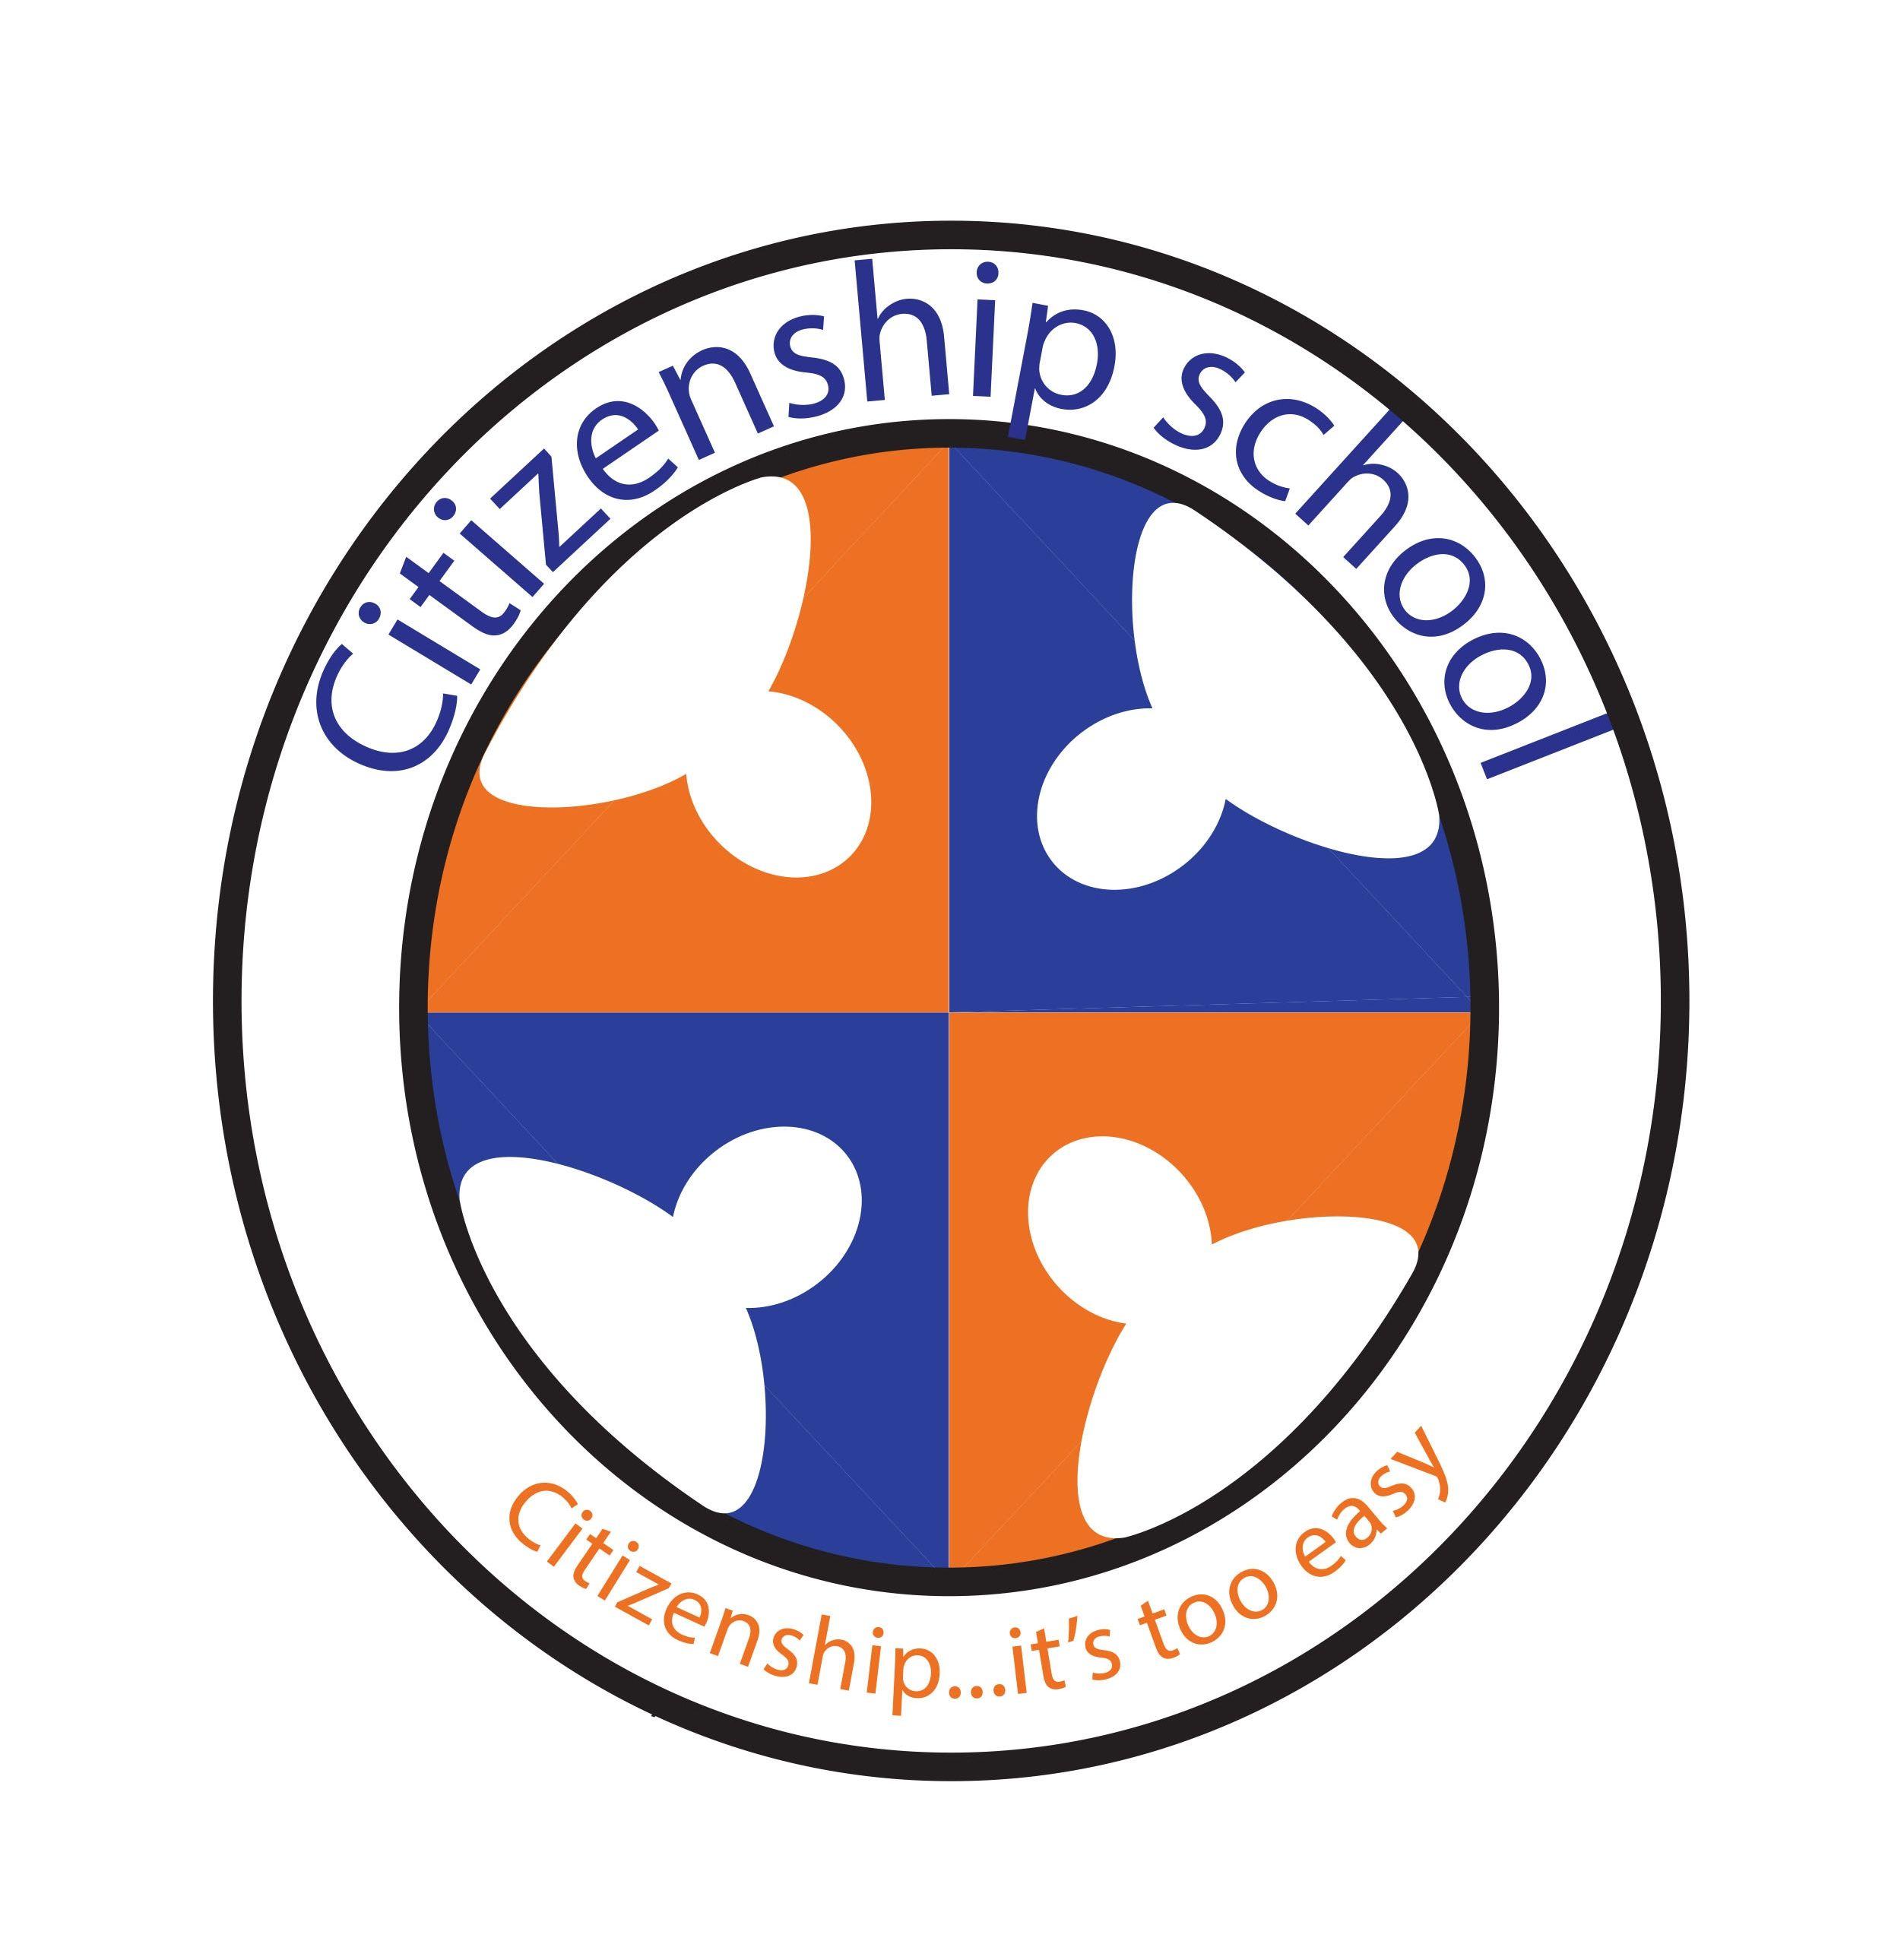 Citizenship Logo - International Citizenship School | Citizenship … It's too easy